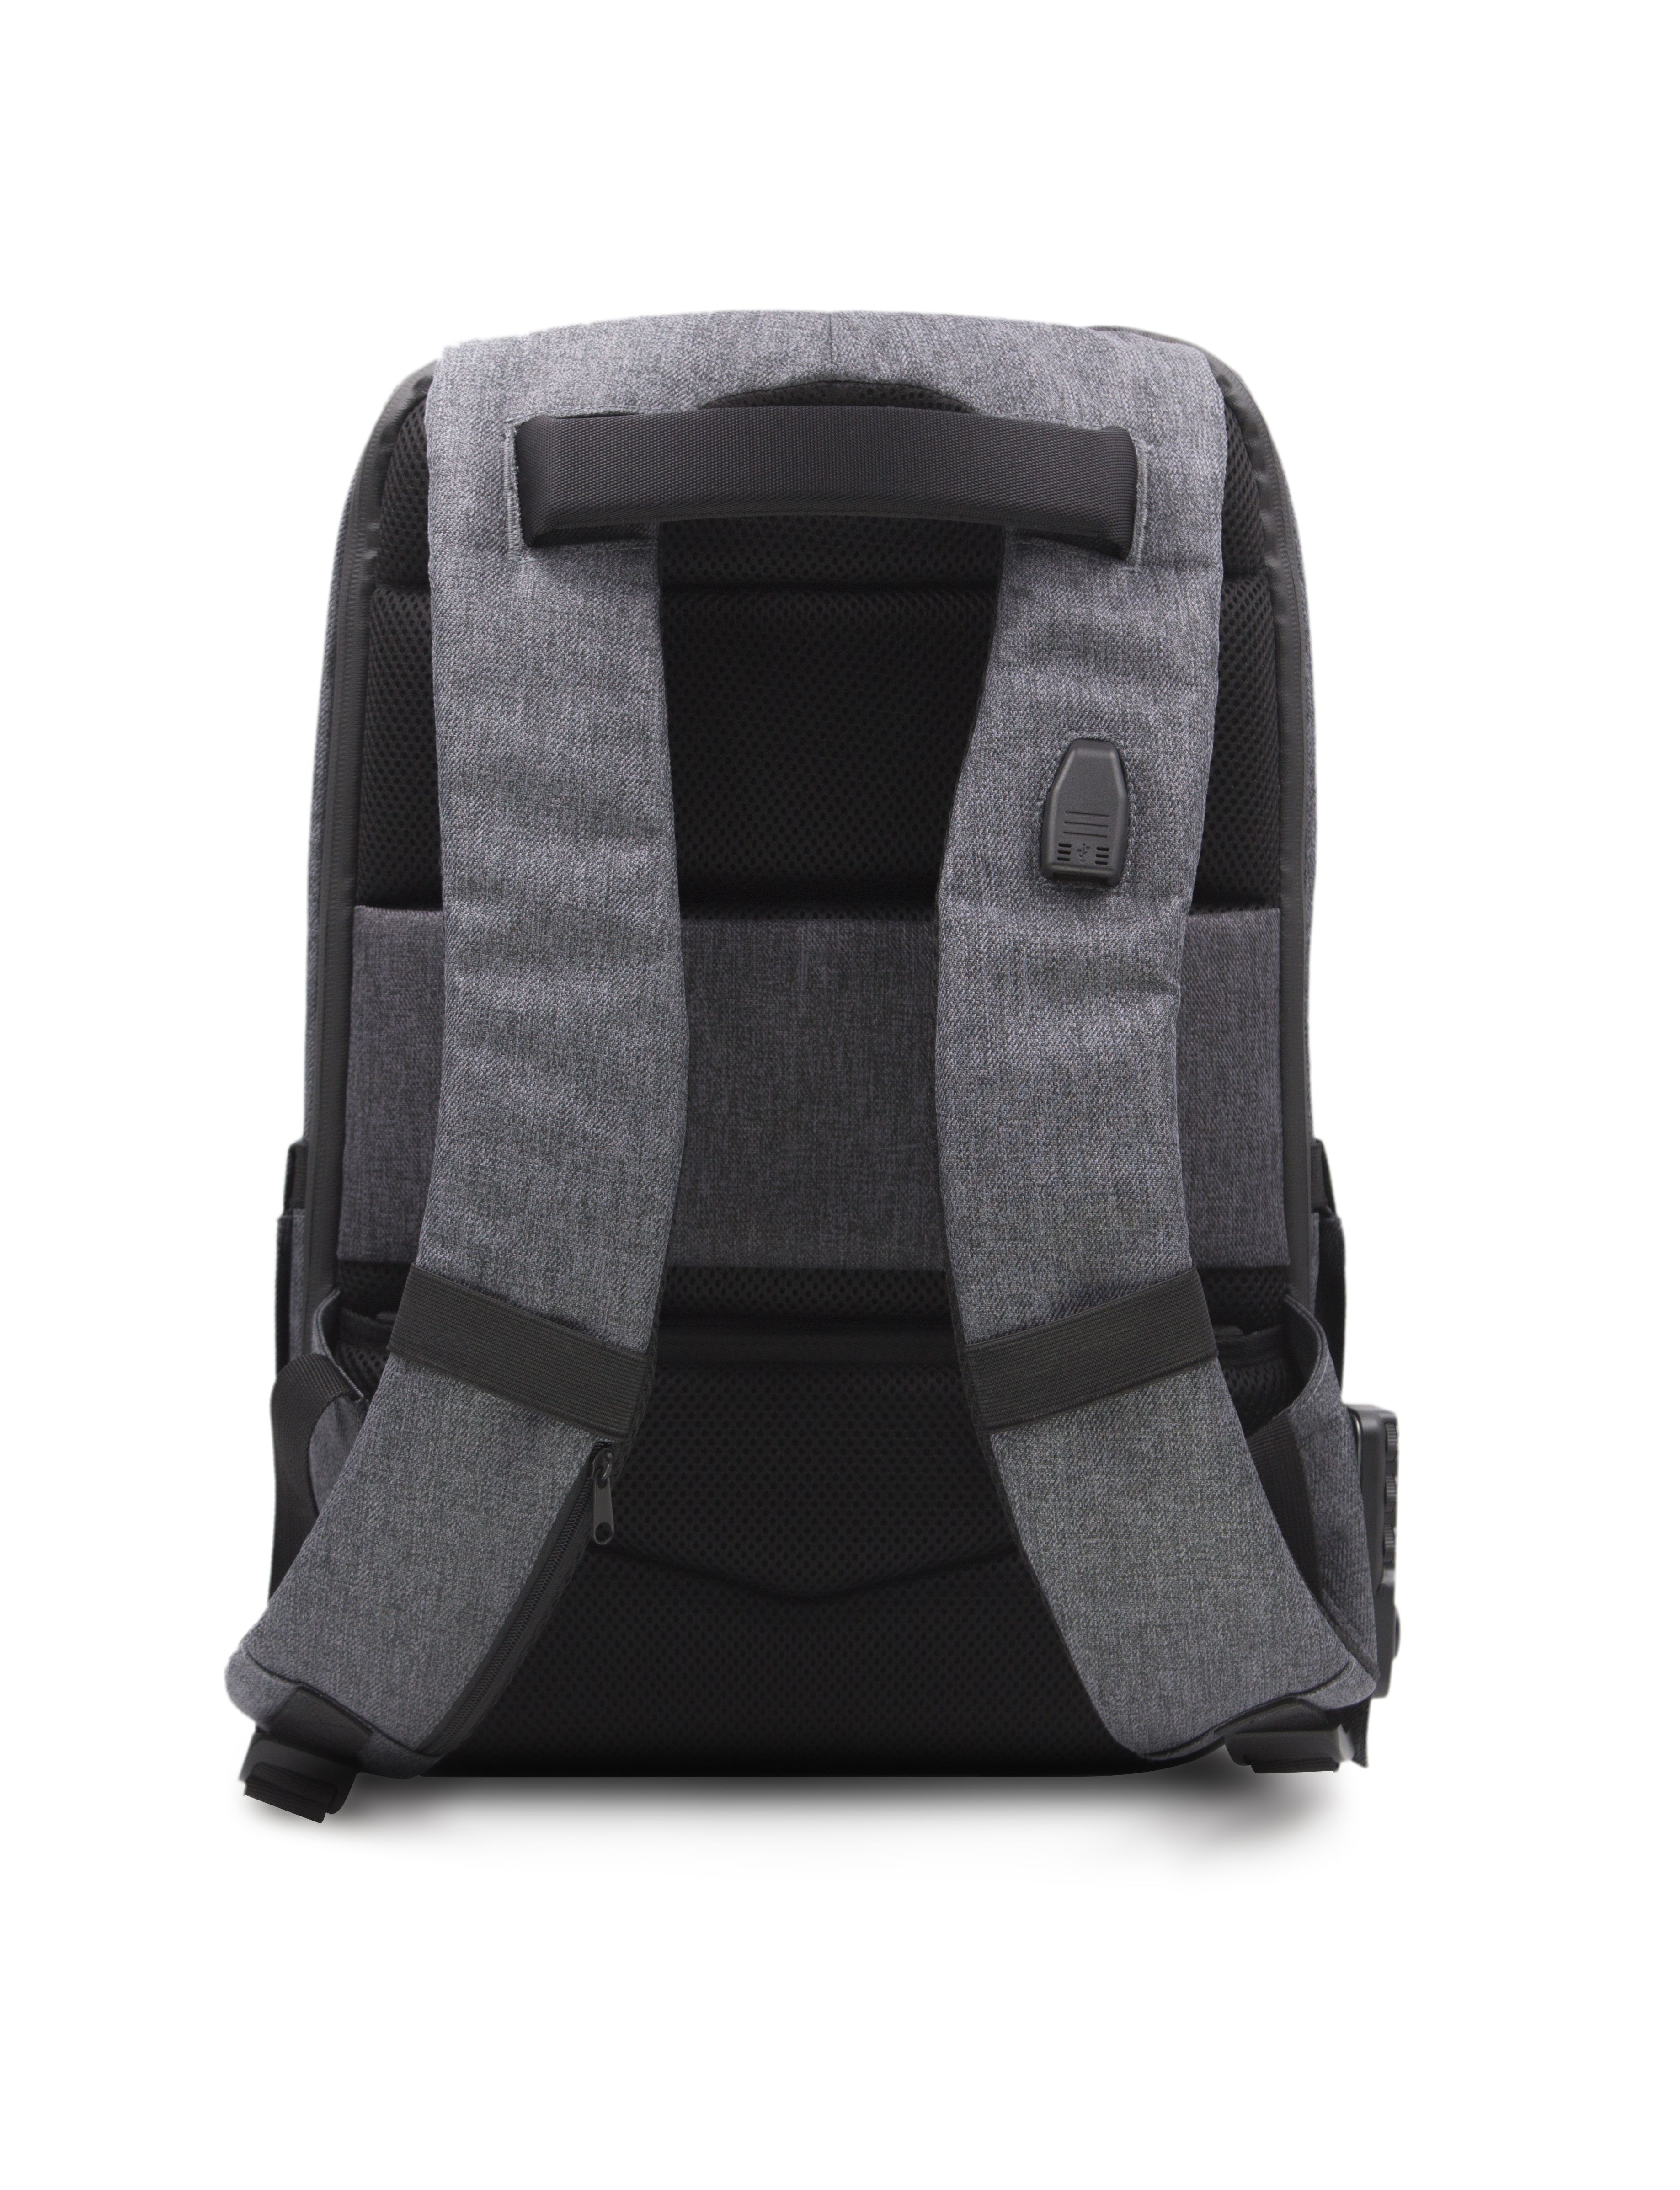 Phantom - Smart Anti-theft Backpack | Brandcharger 2021